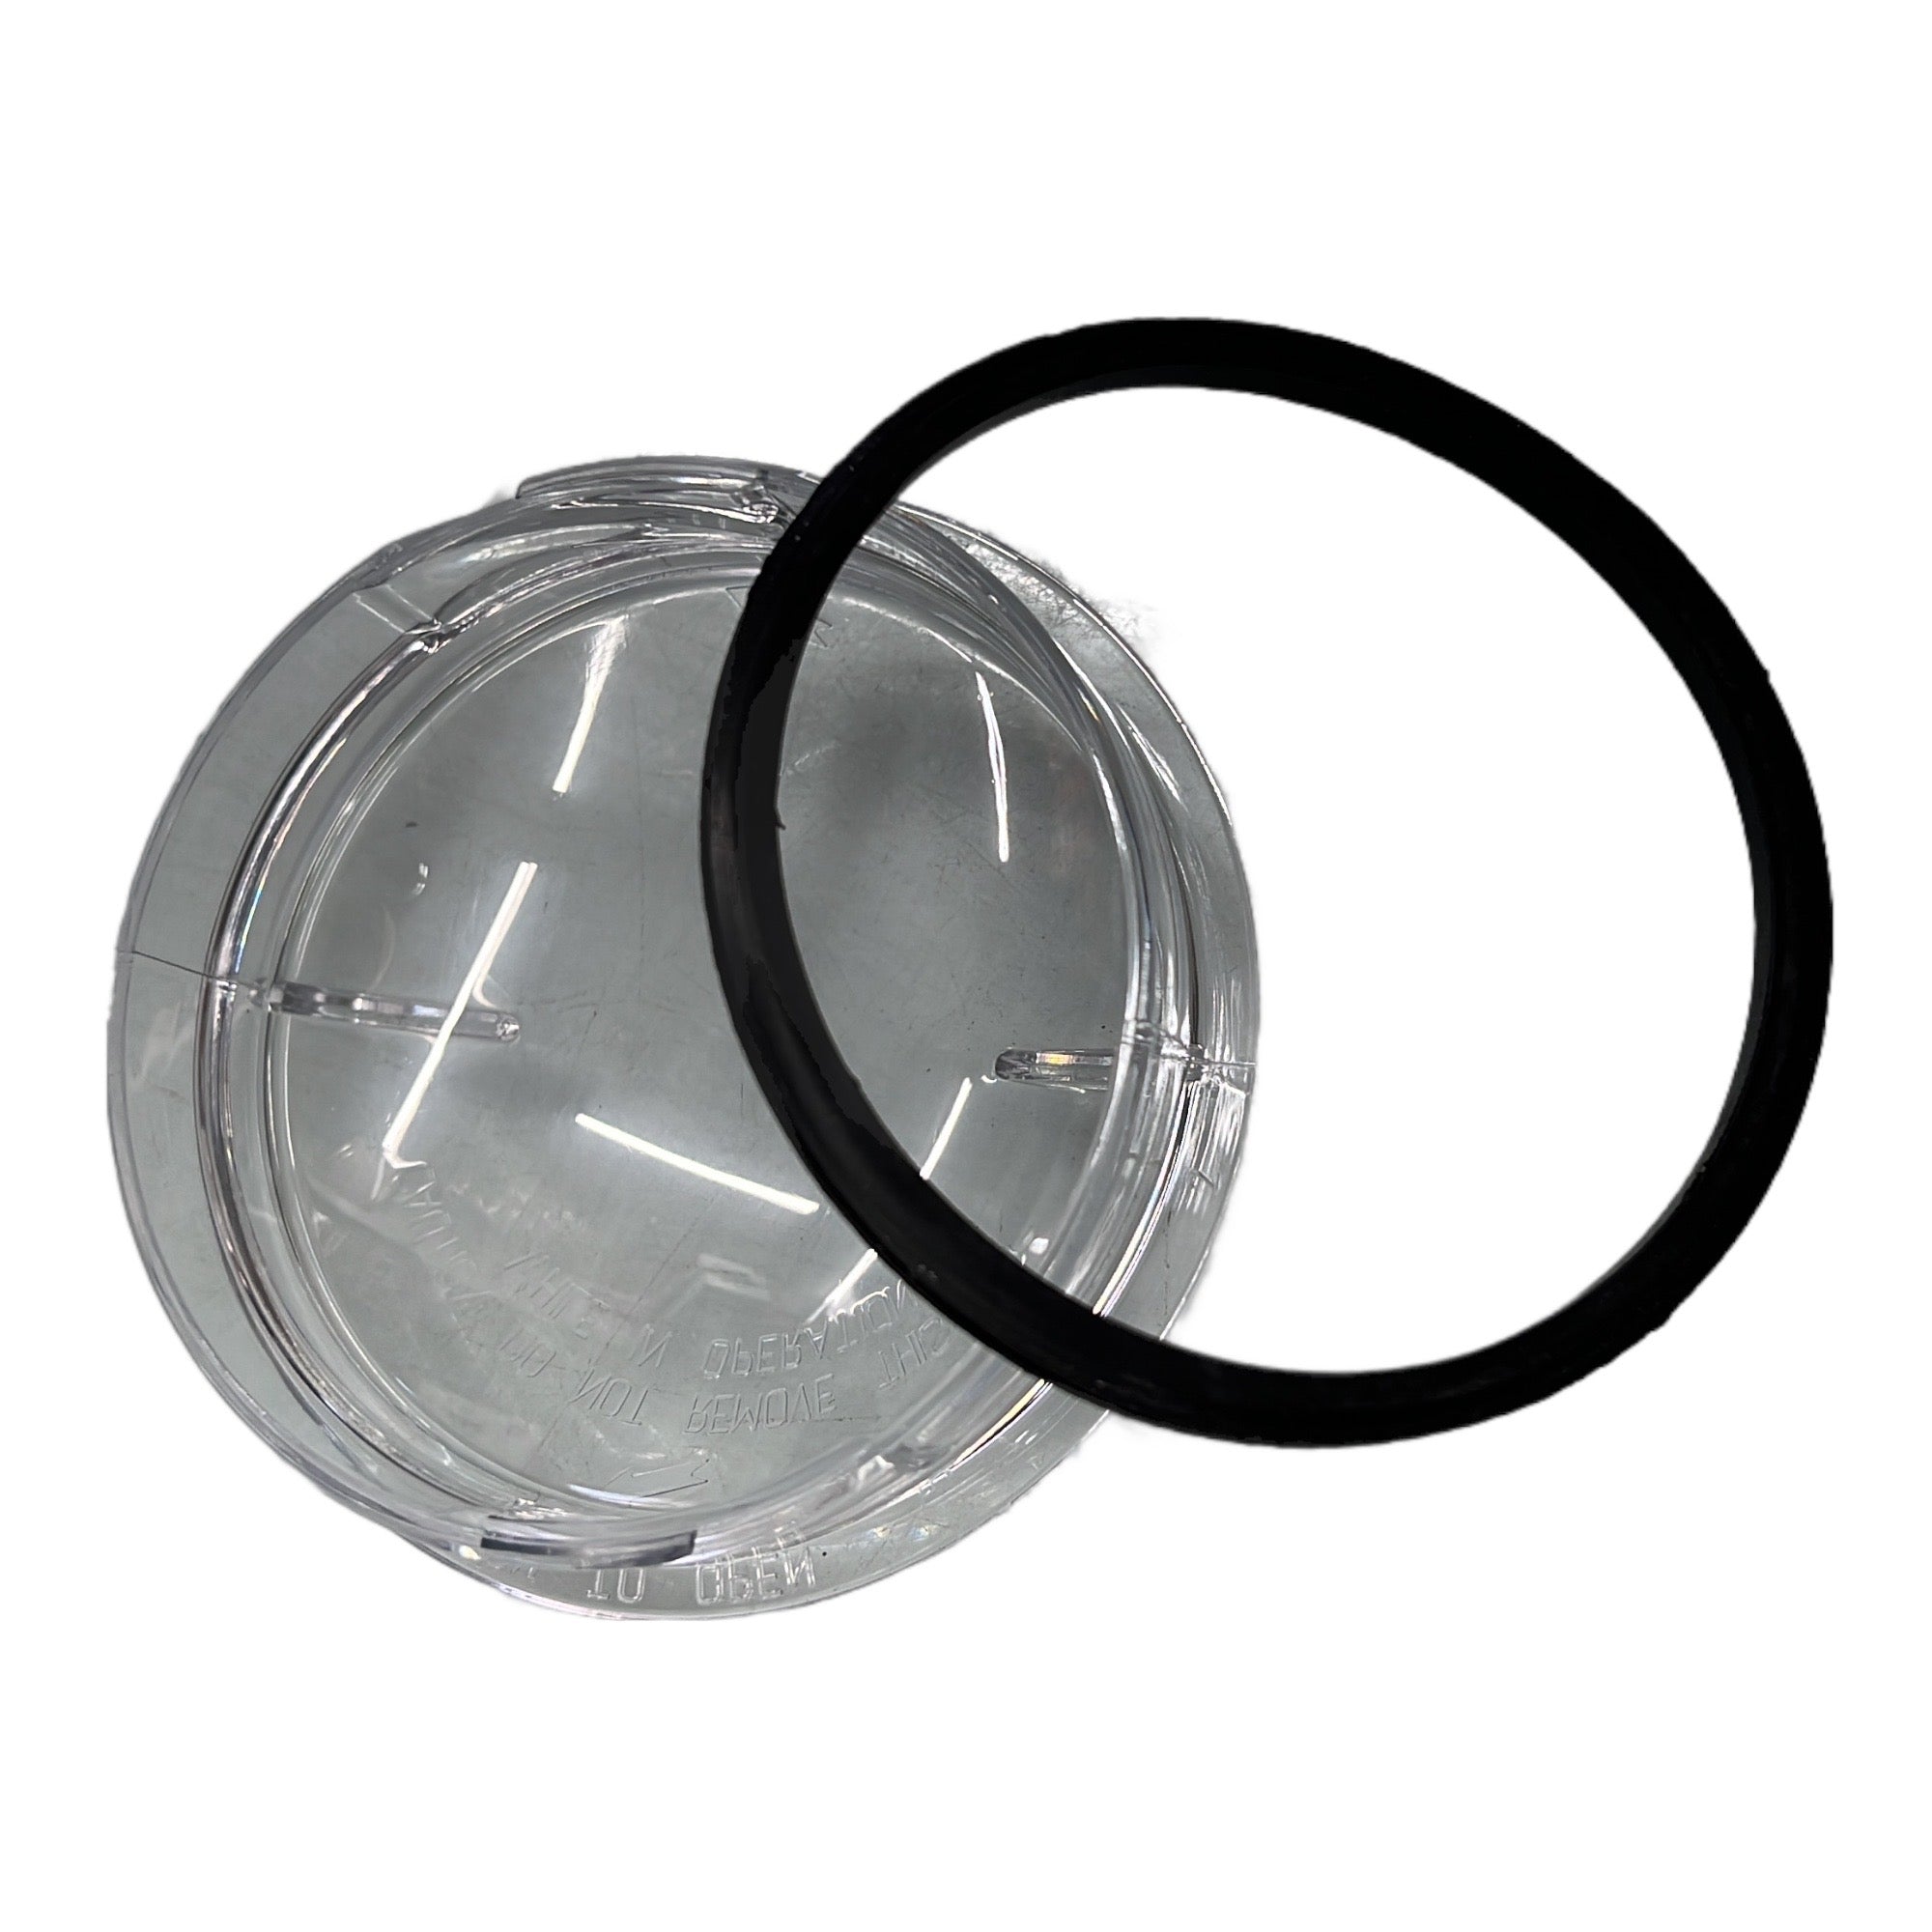 Preethi Jar lid gasket suitable for MGA501 model jar only